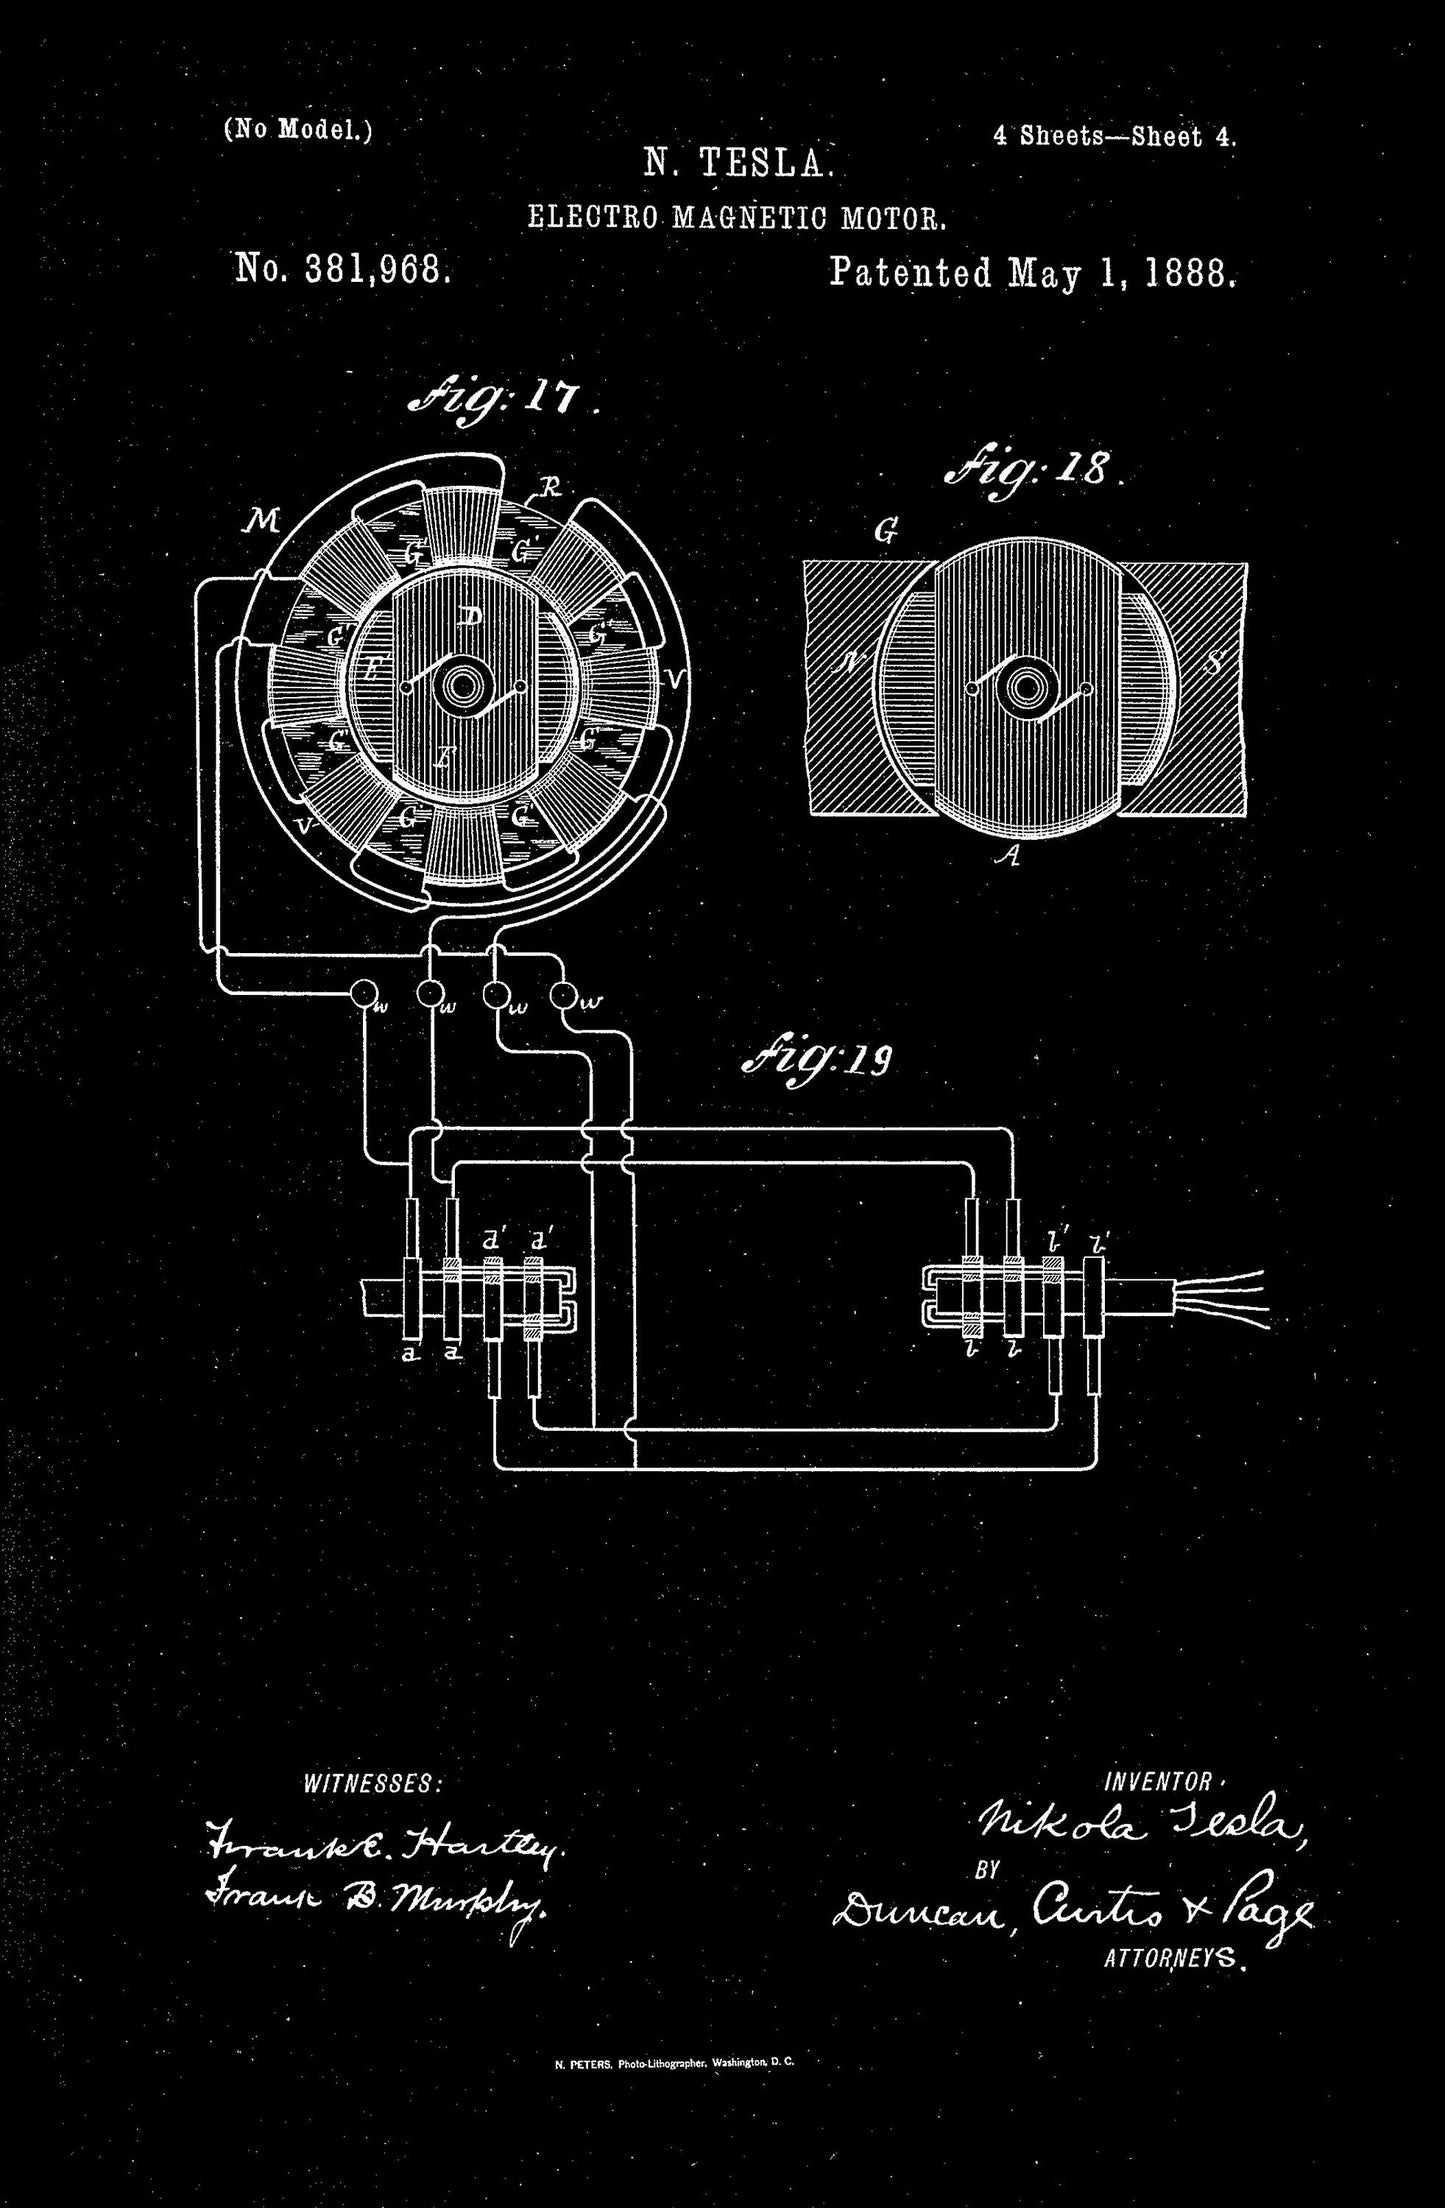 Nikola Tesla Engineering Patents & Inventions Black 126 [Images]